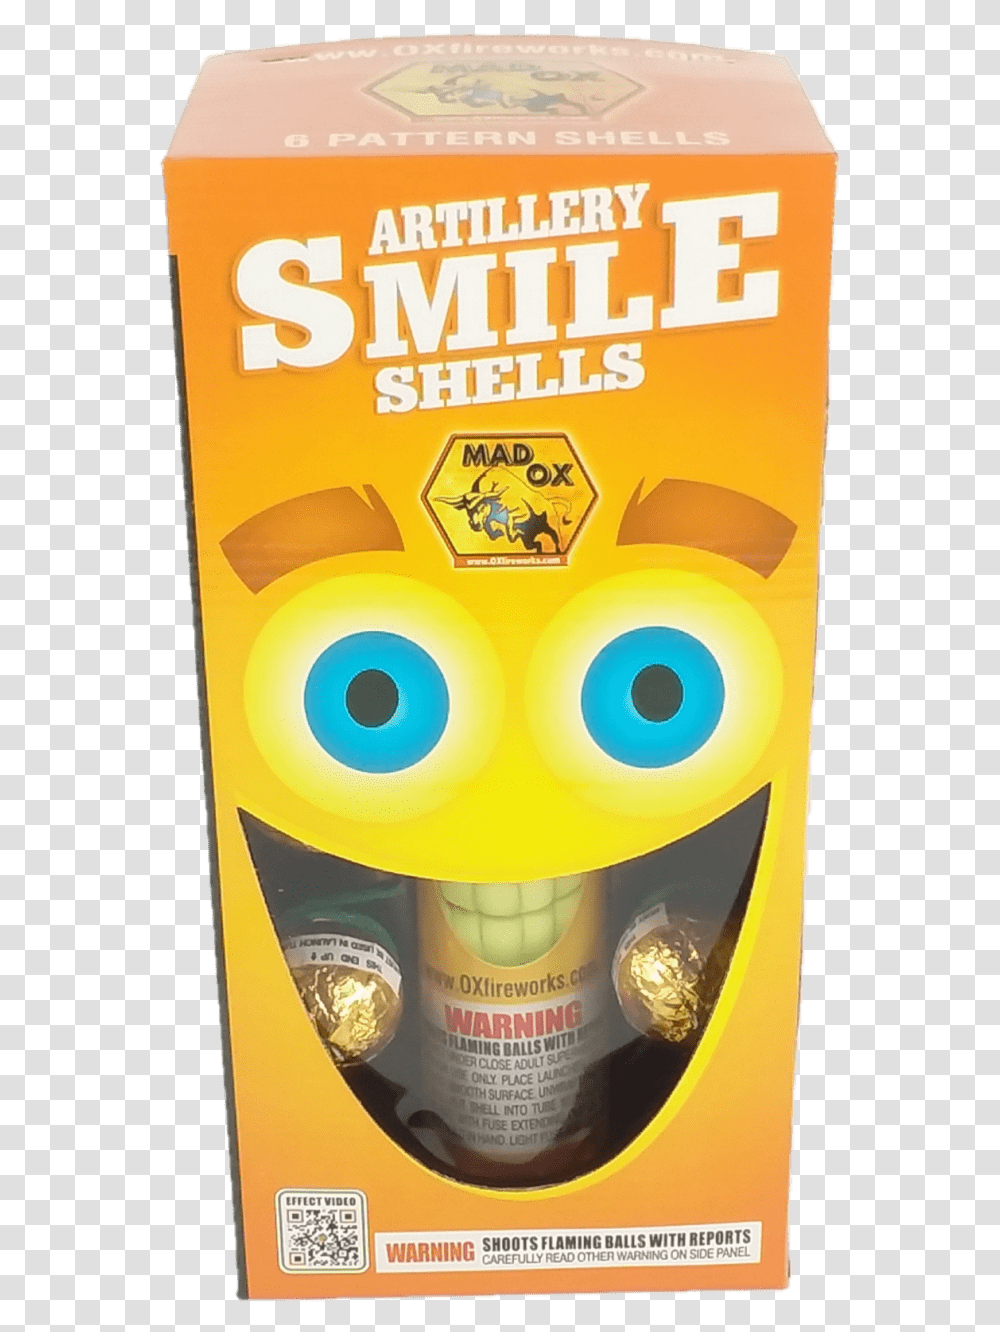 Artillery Smile Shells Torch, Advertisement, Poster, Food, Paper Transparent Png